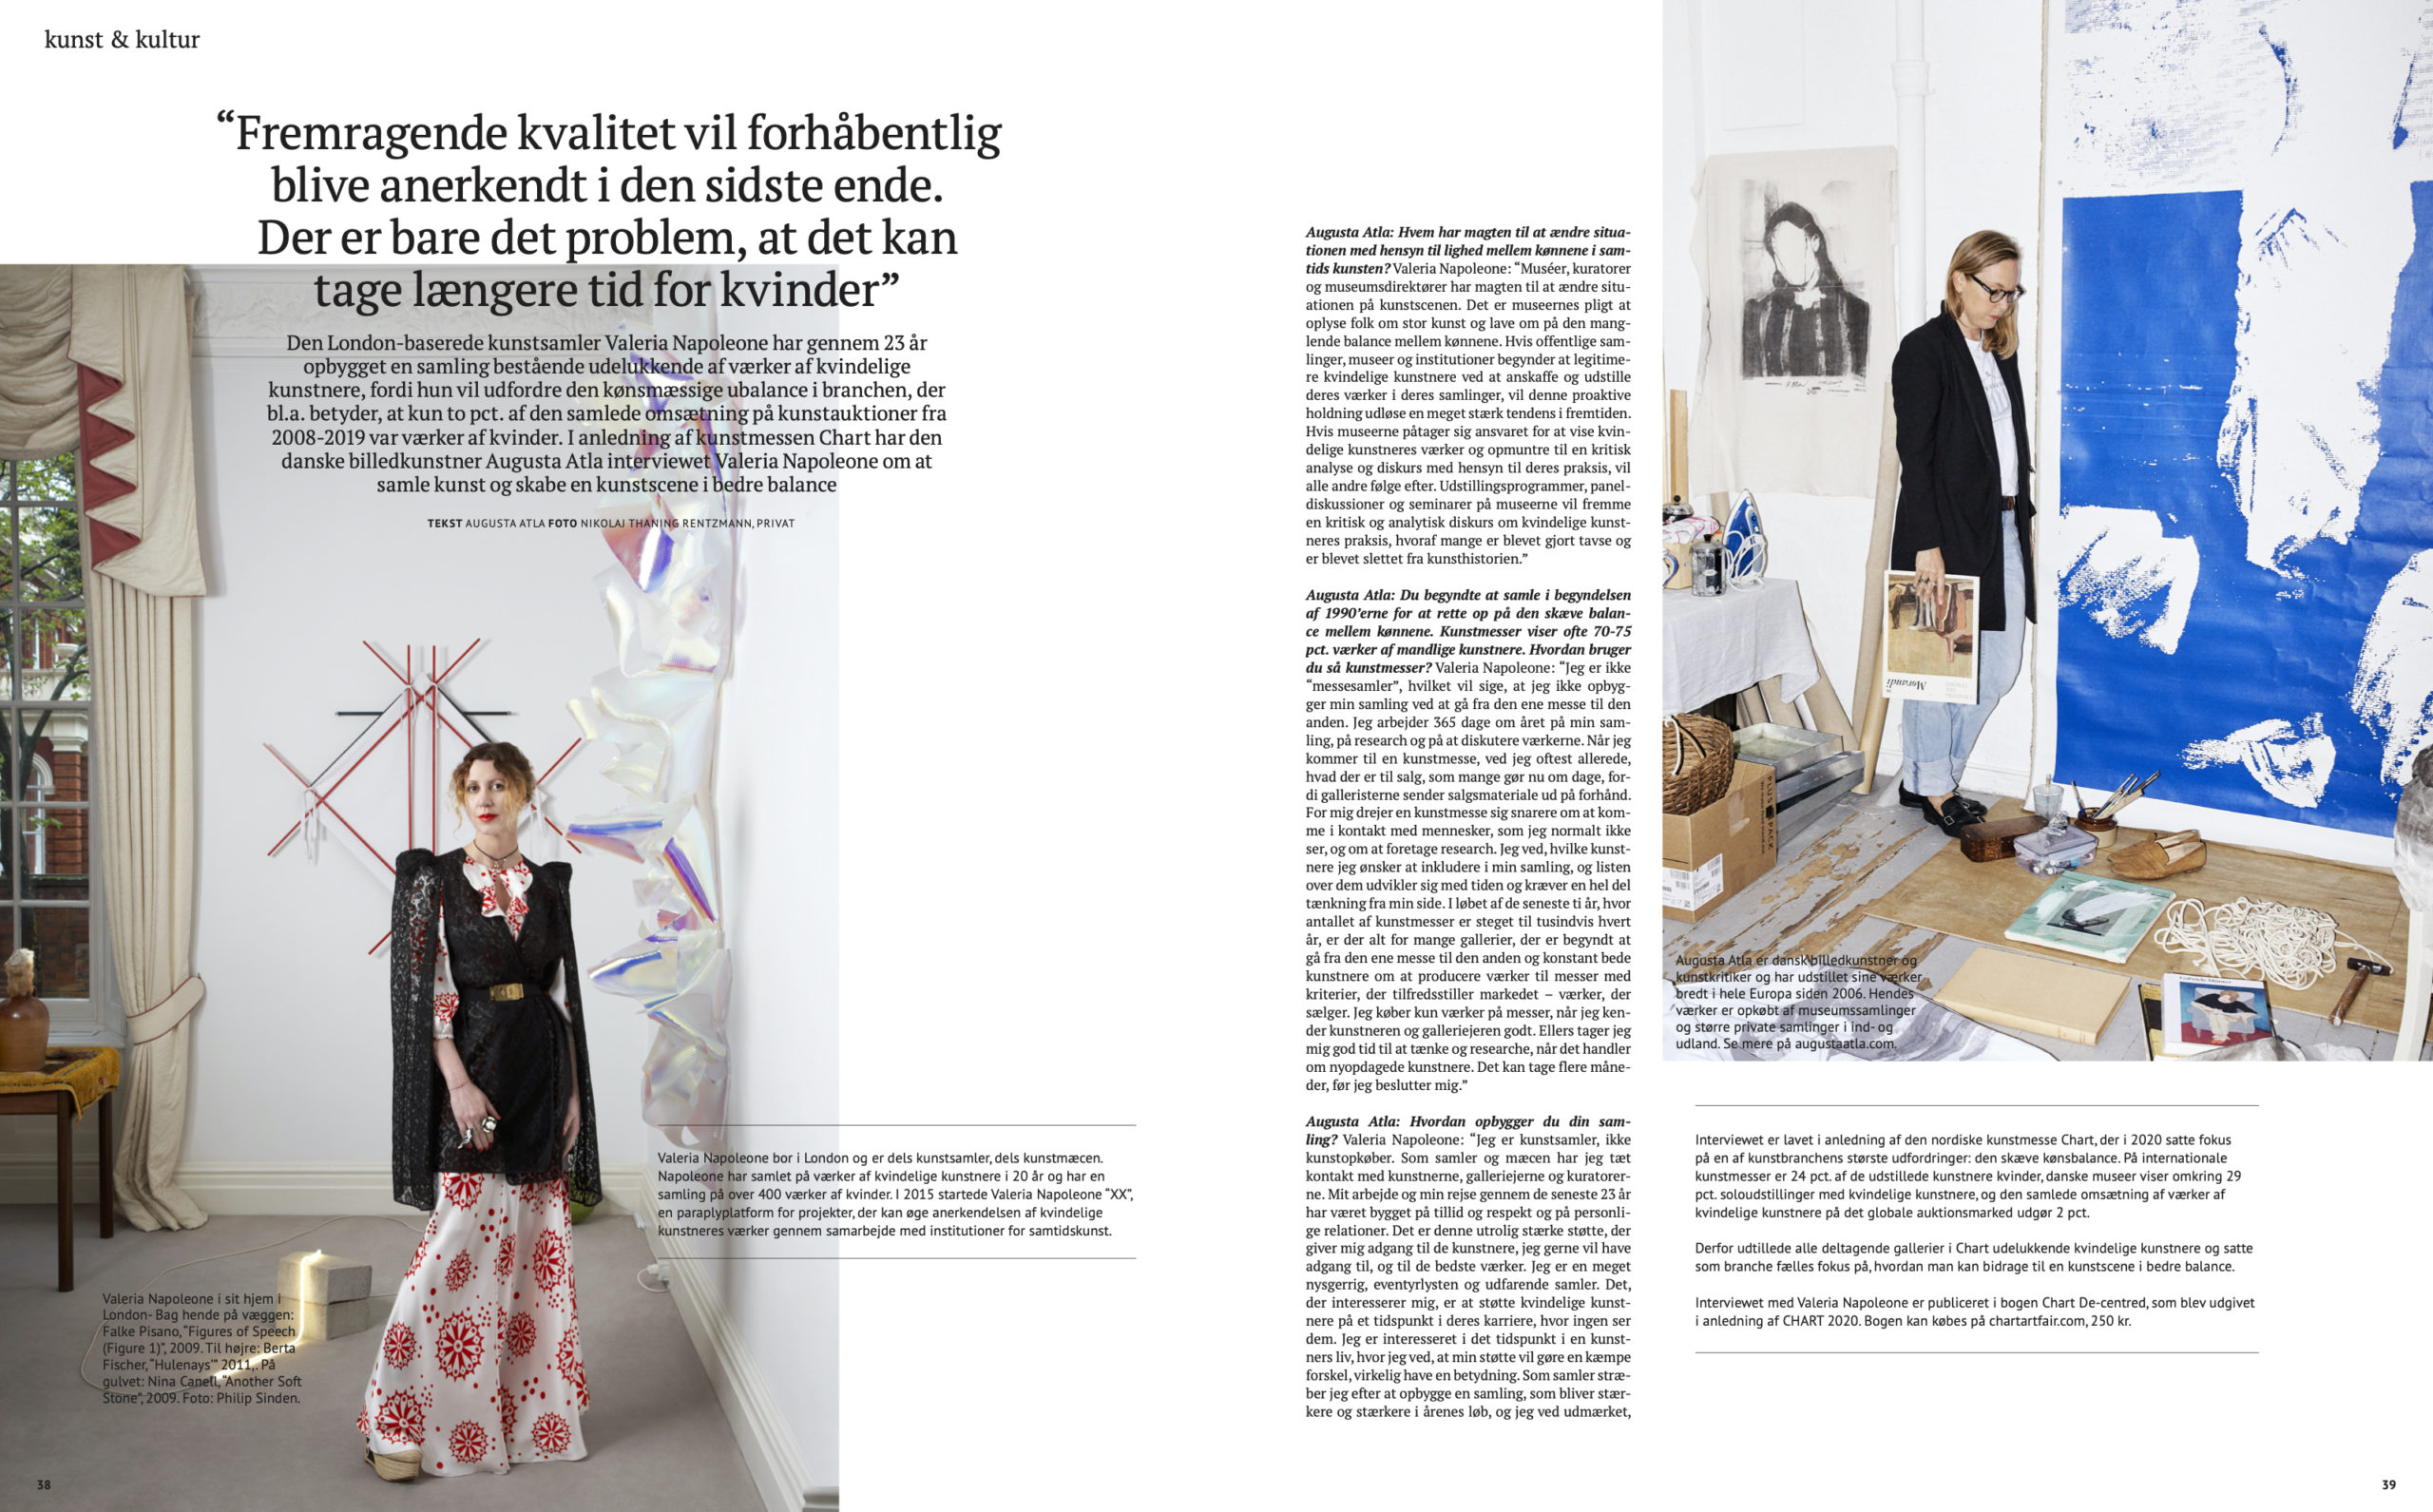 Interview with Valeria Napoleone by the Danish artist Augusta Atla in Børsen Pleasure 2020